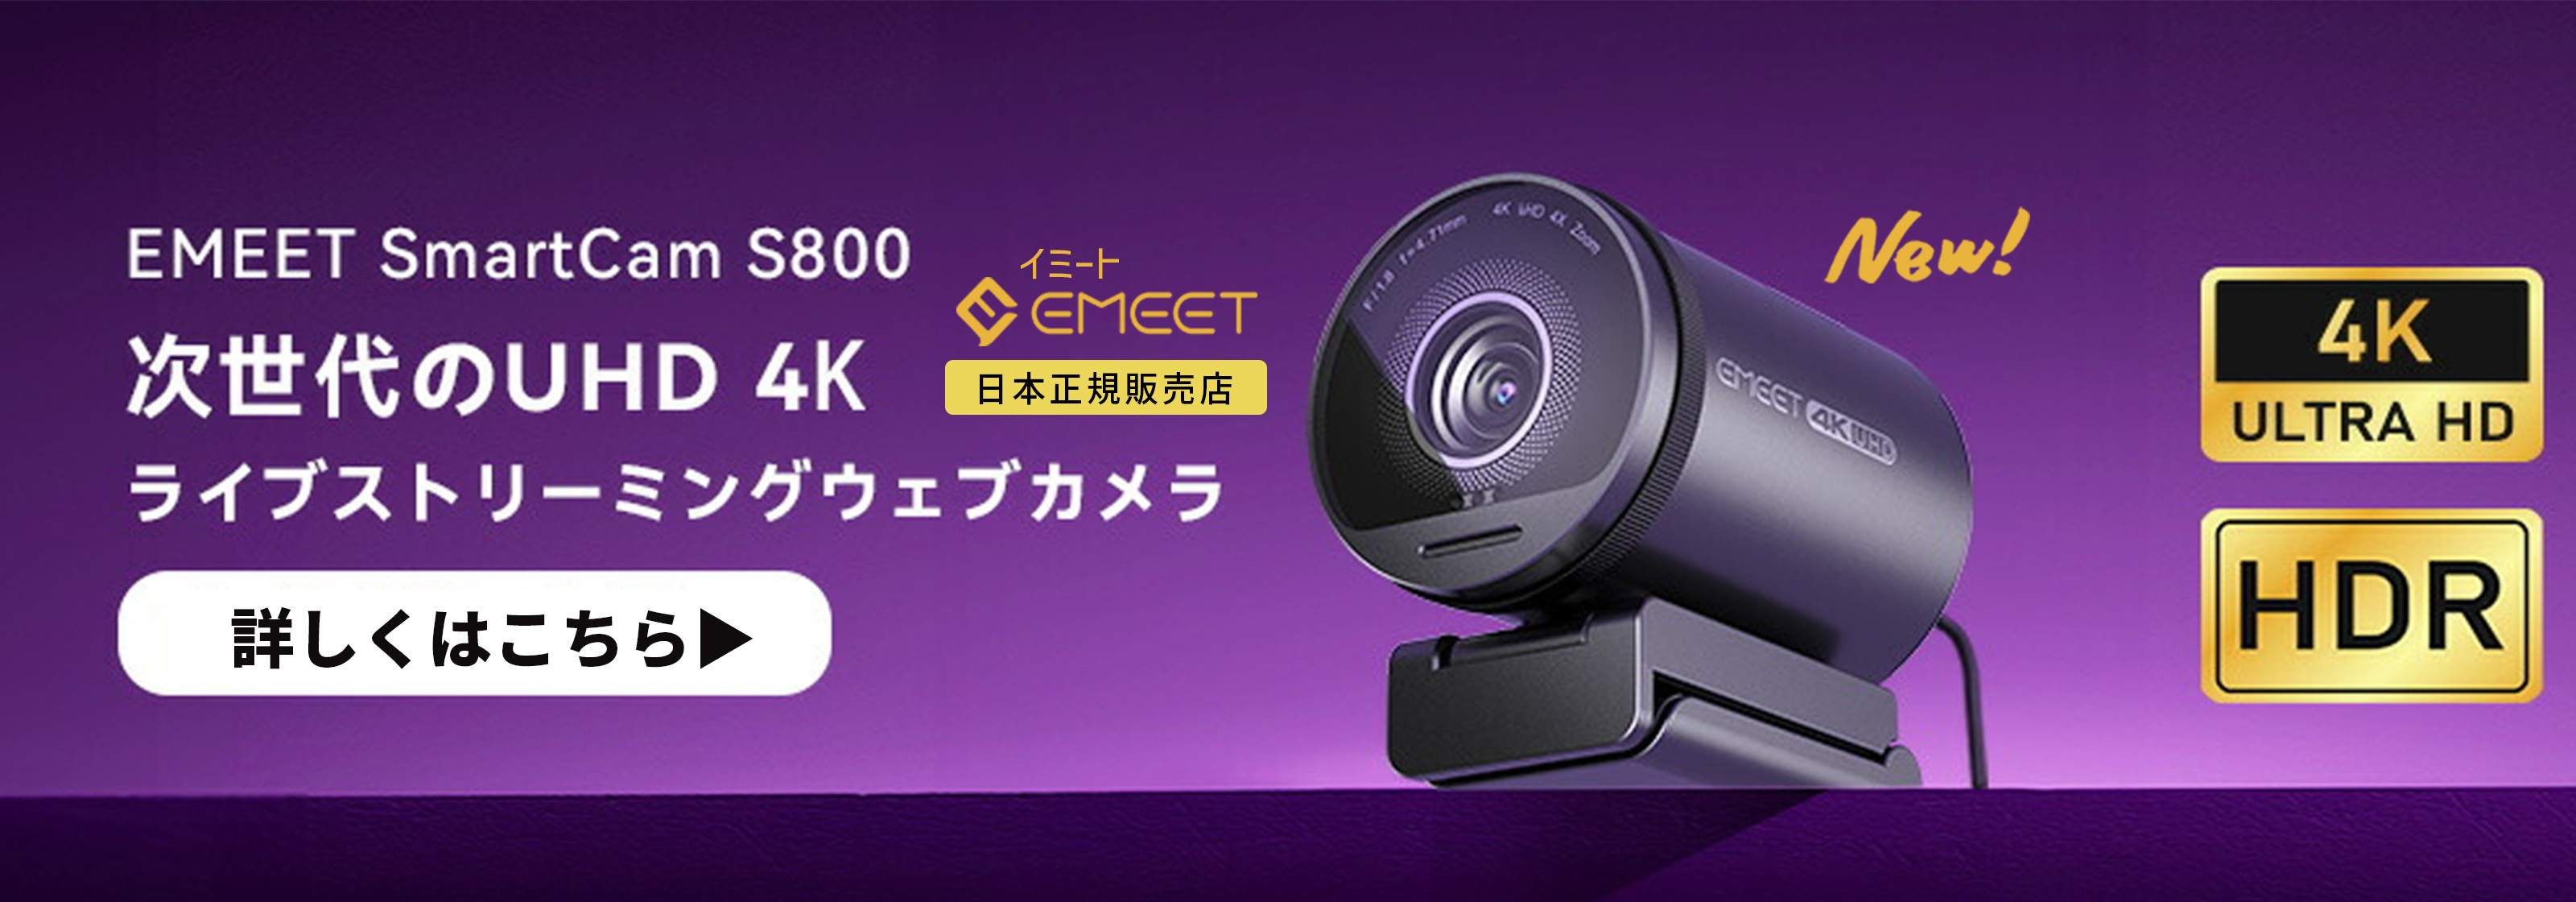 EMEET S800 Webカメラ